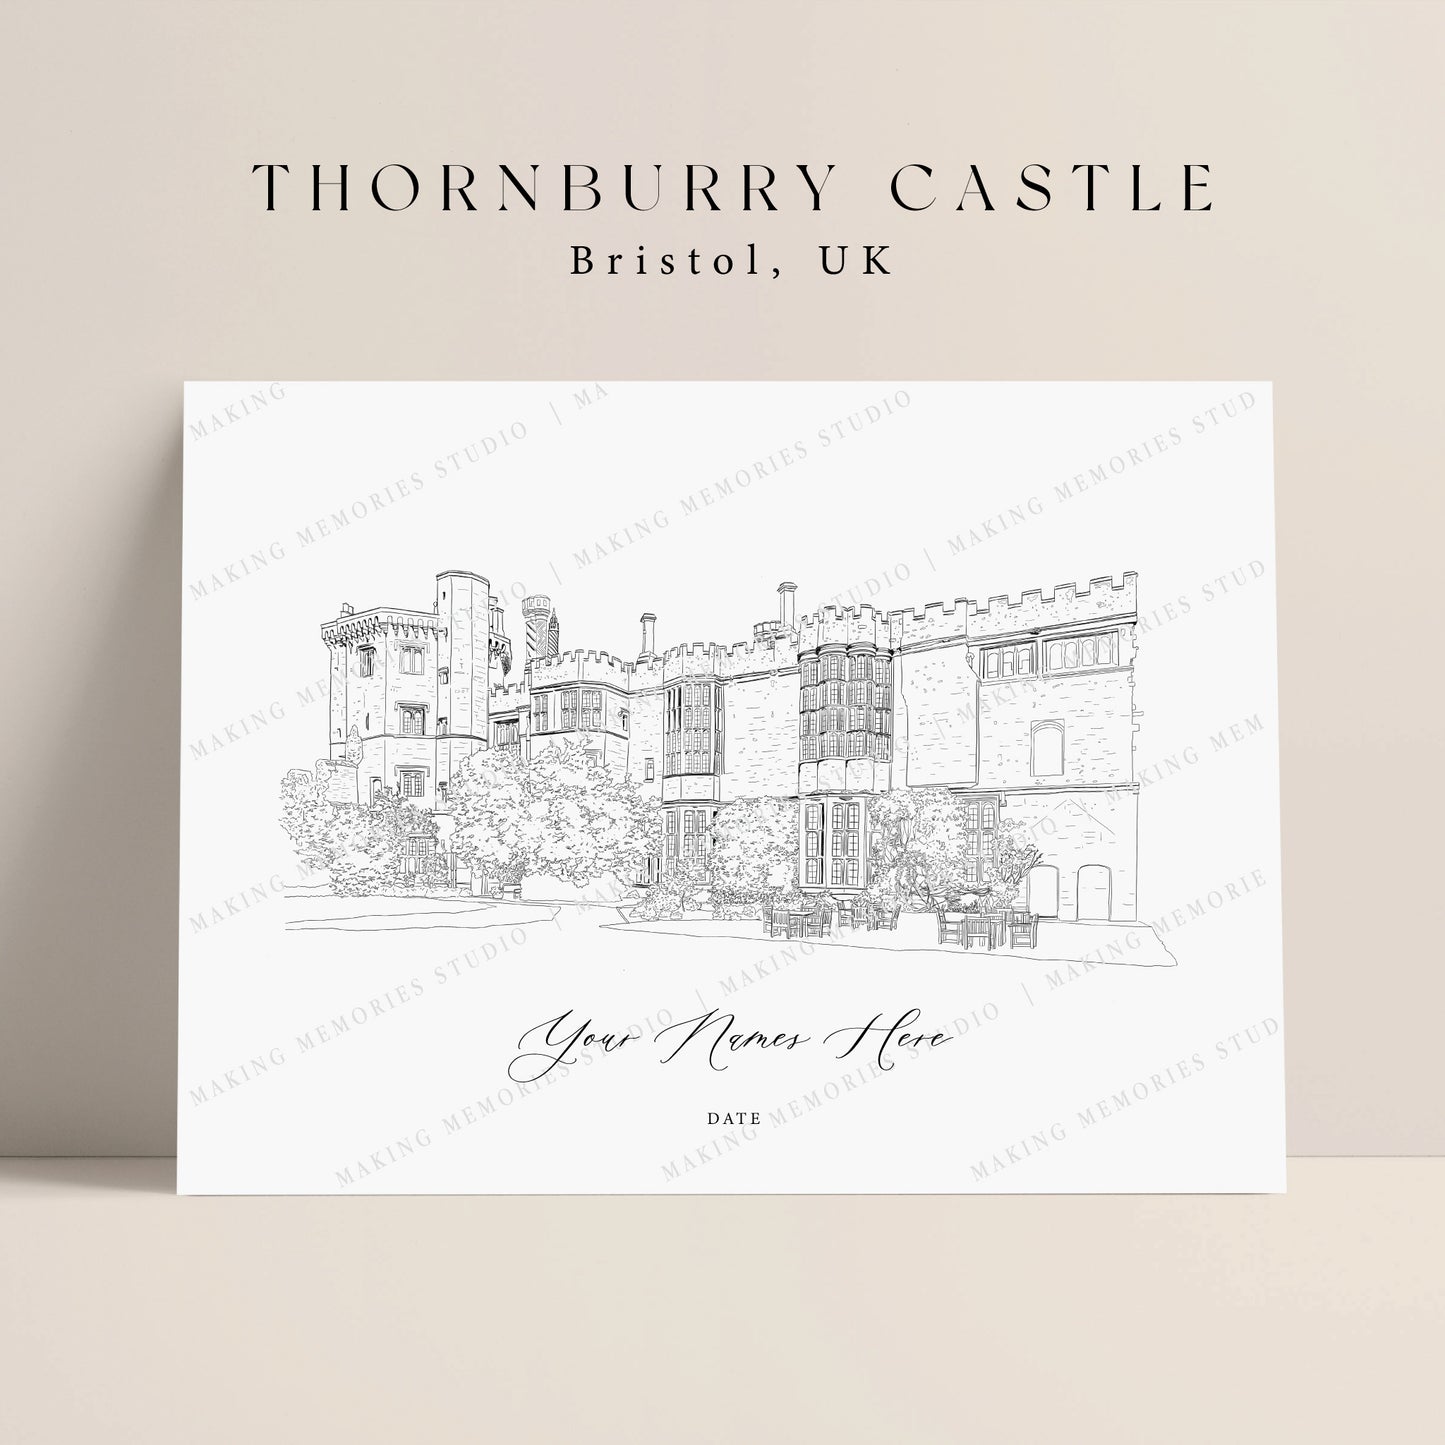 Thornburry Castle - Bristol, UK